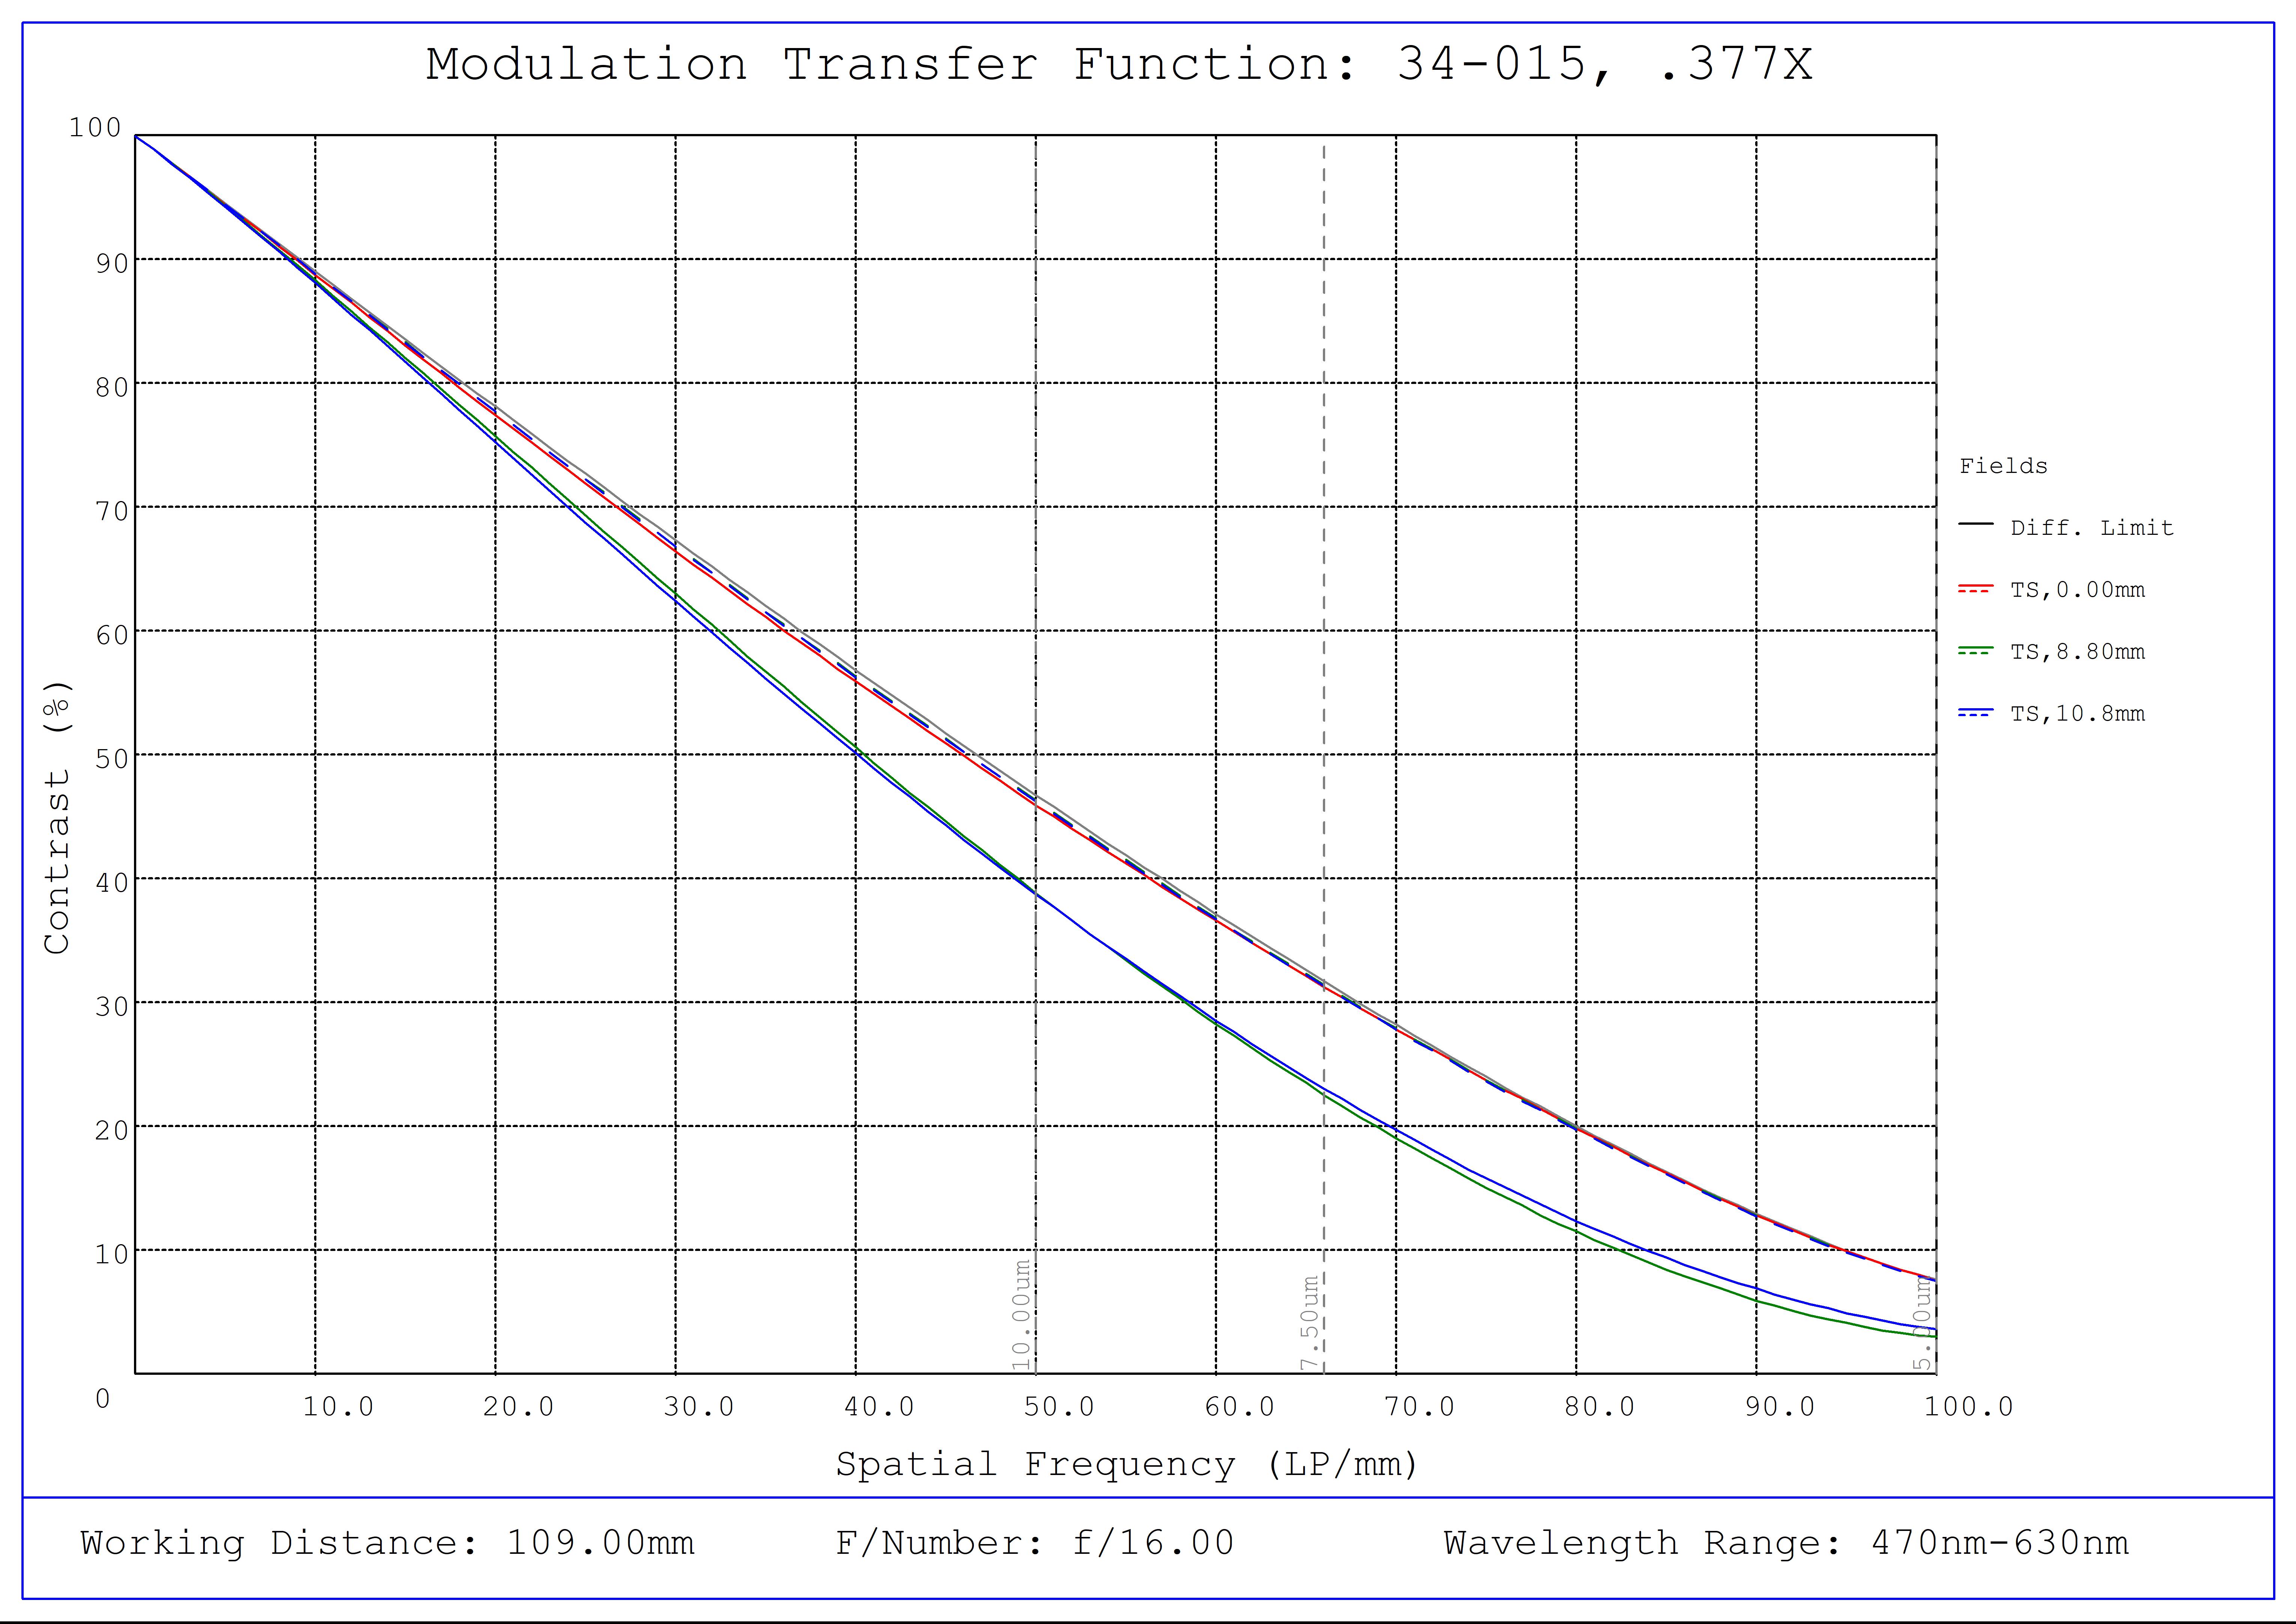 #34-015, 0.377X, 4/3" C-Mount TitanTL® Telecentric Lens, Modulated Transfer Function (MTF) Plot, 109mm Working Distance, f16